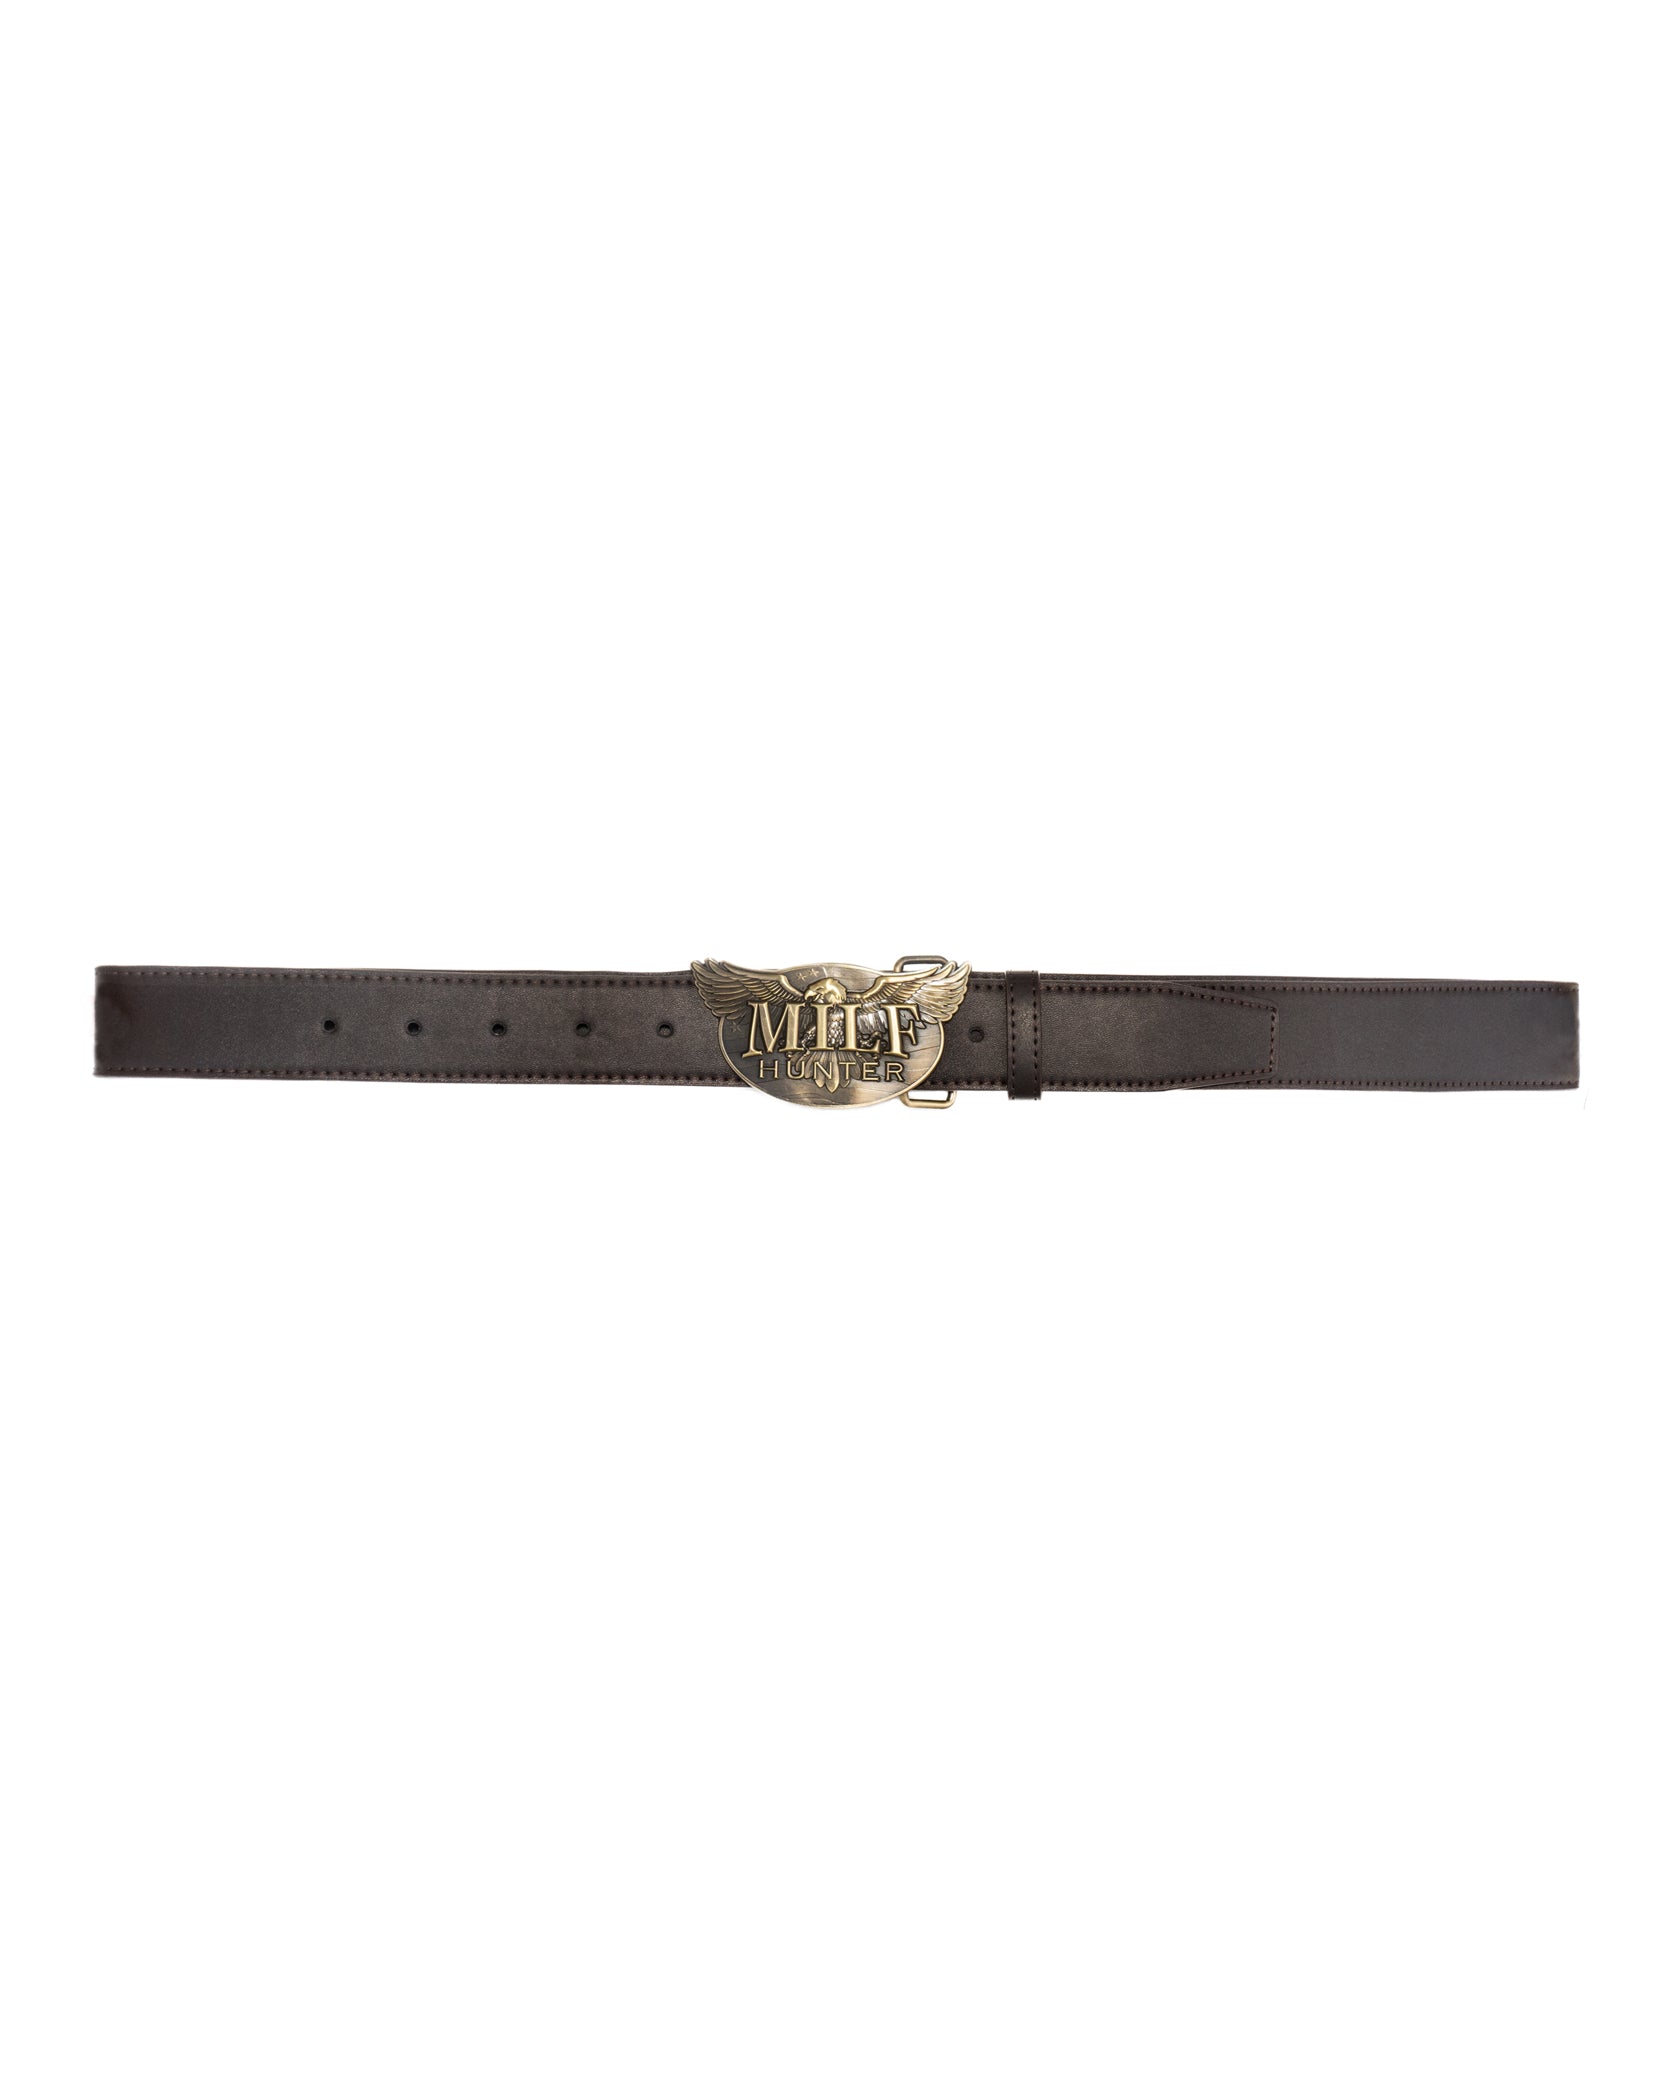 MILF Hunter Leather Belt - Brown / Bronze